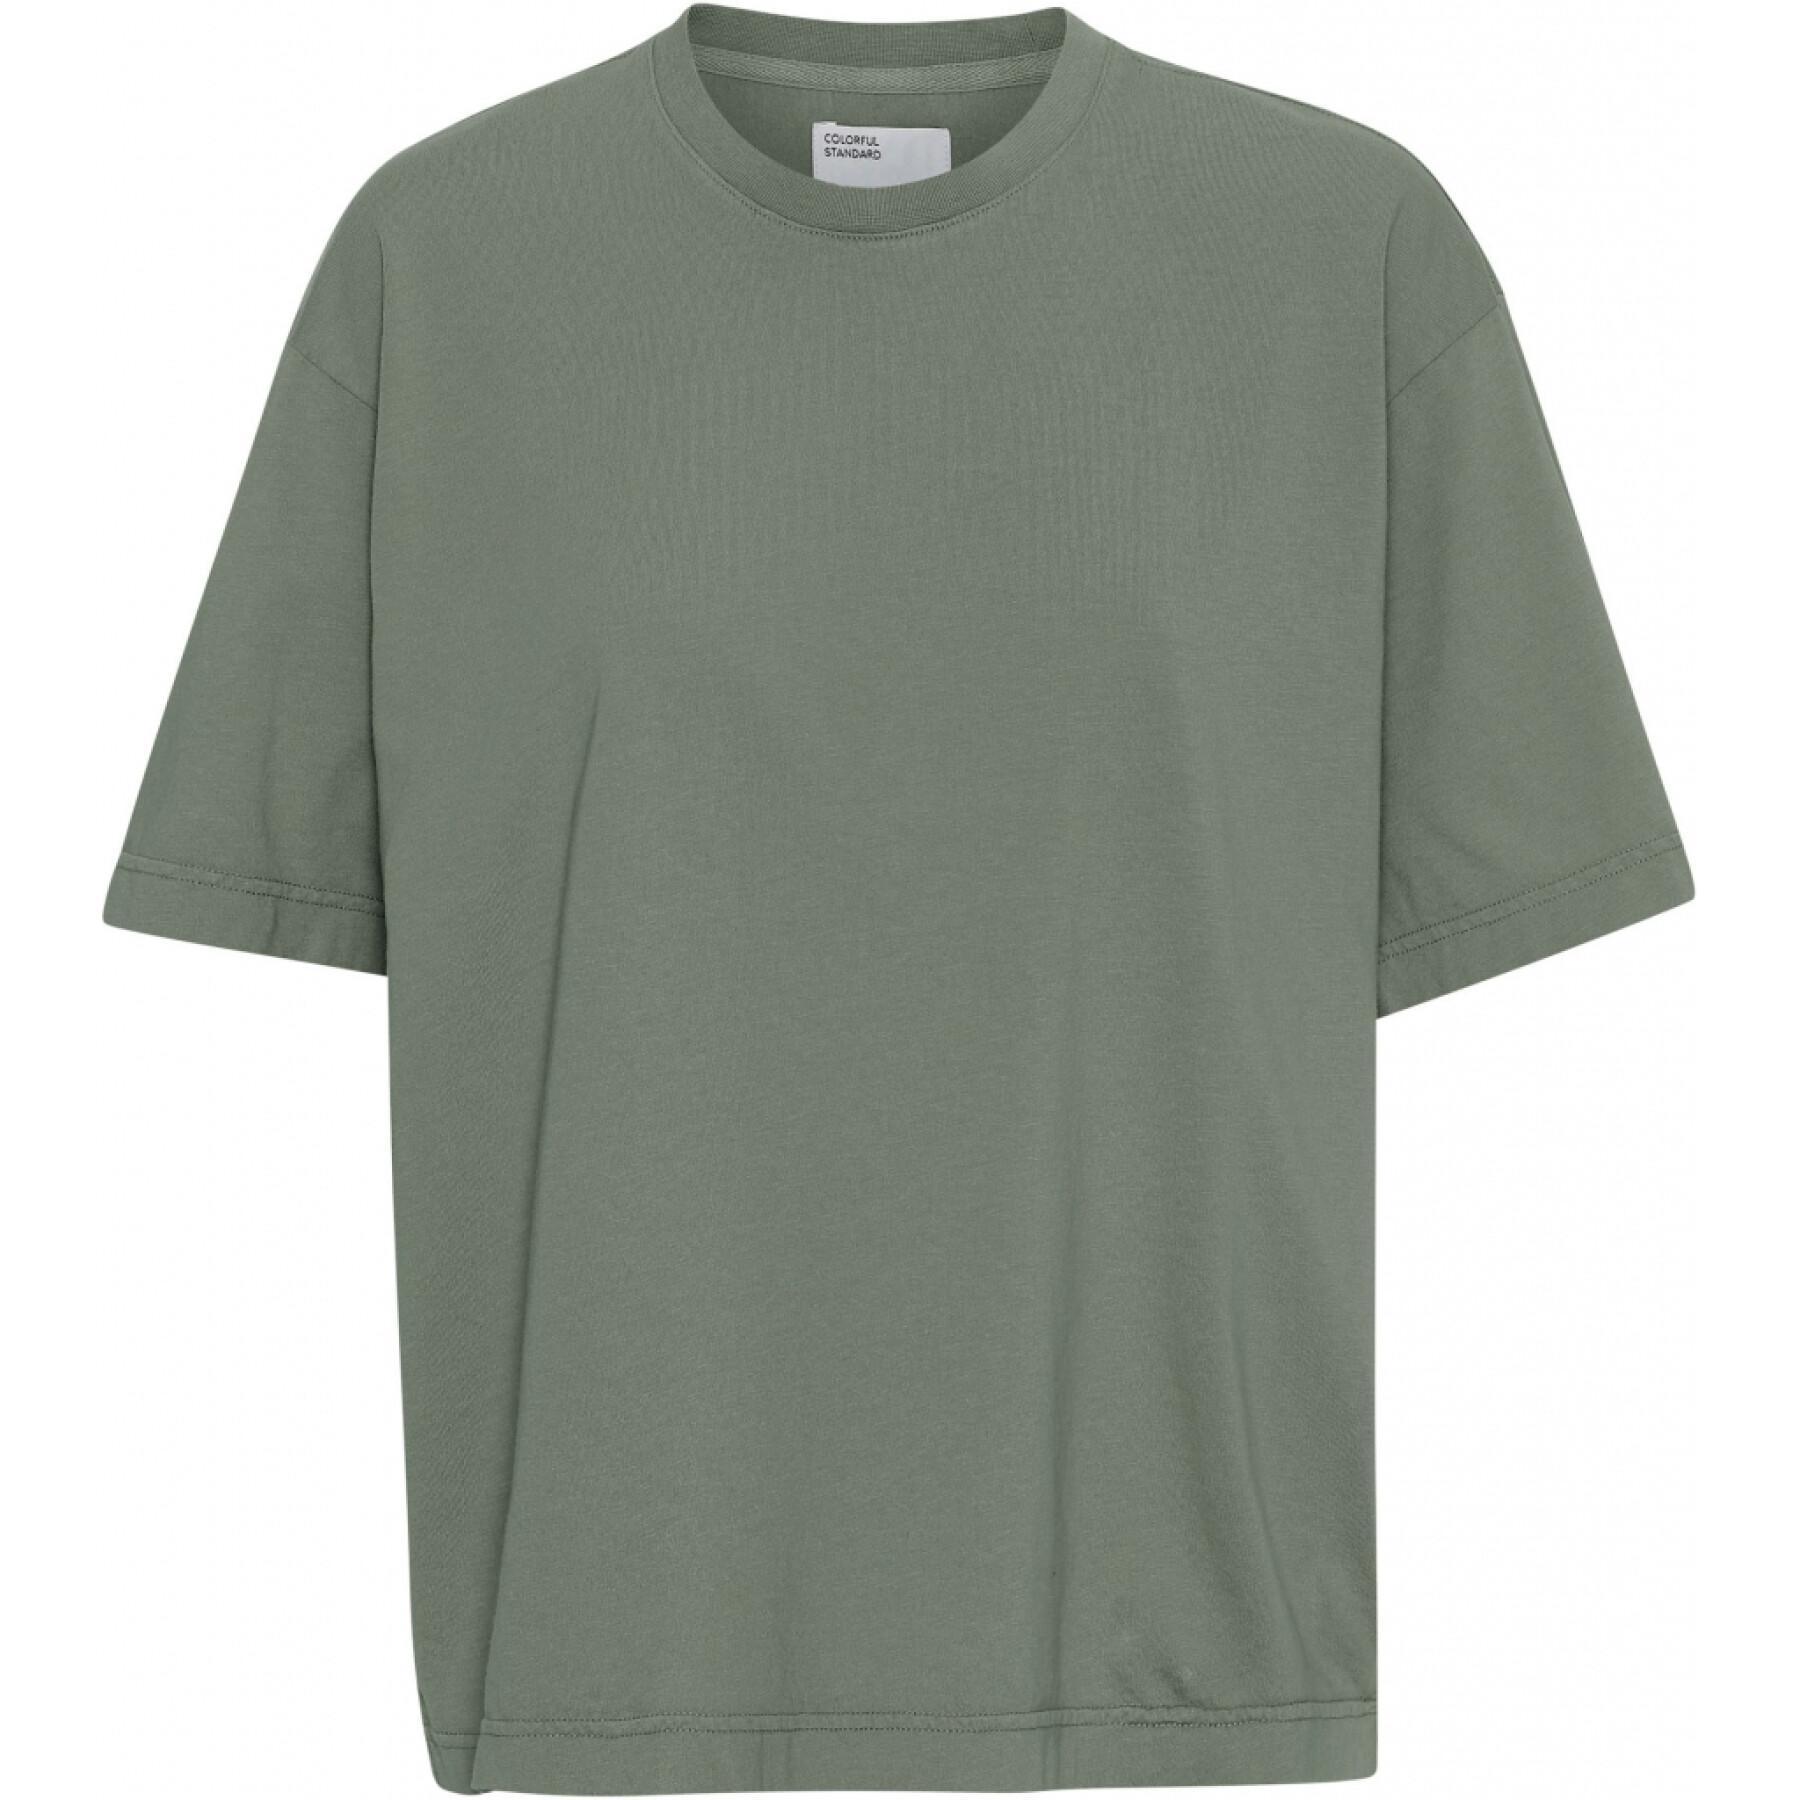 Women's T-shirt Colorful Standard Organic oversized dusty olive